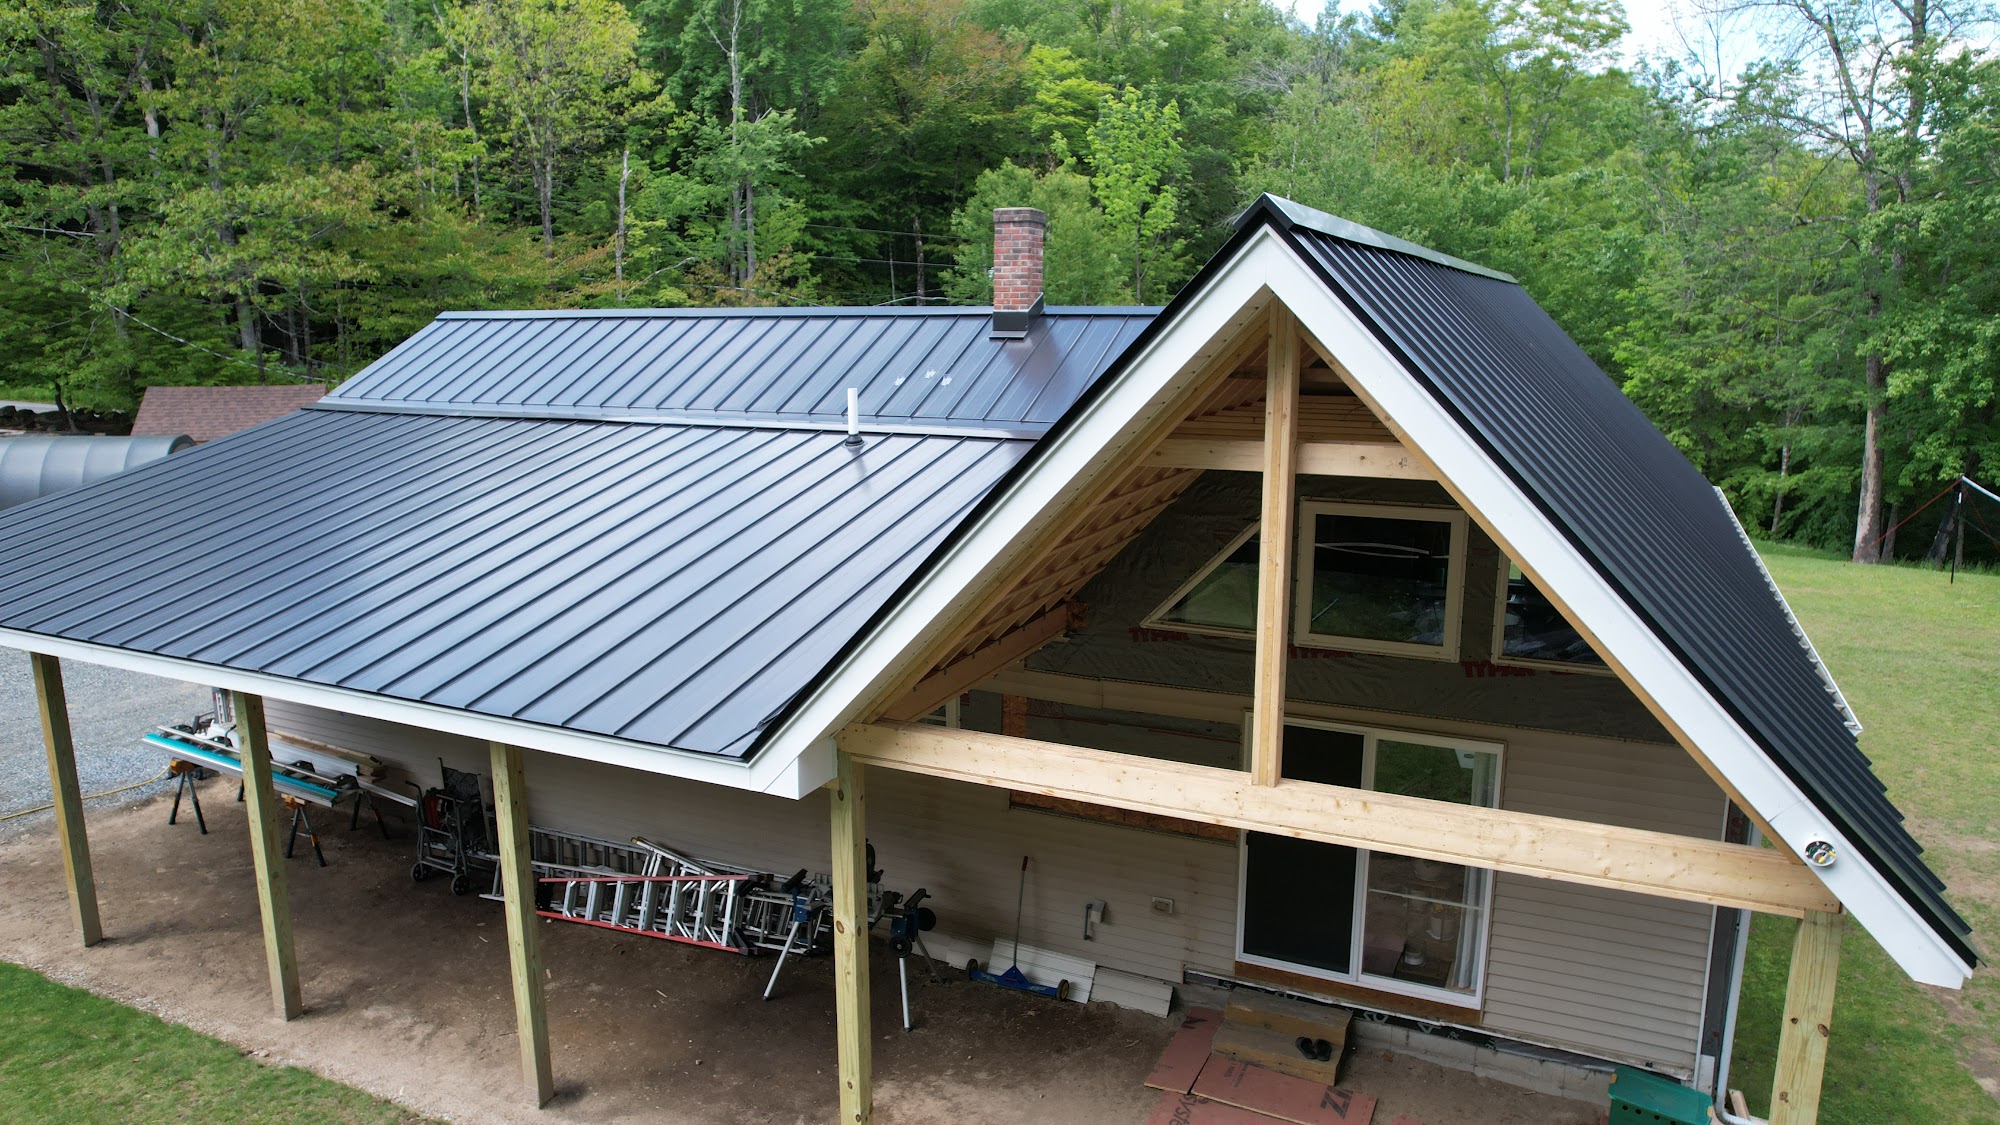 Advanced Metal Roofing LLC